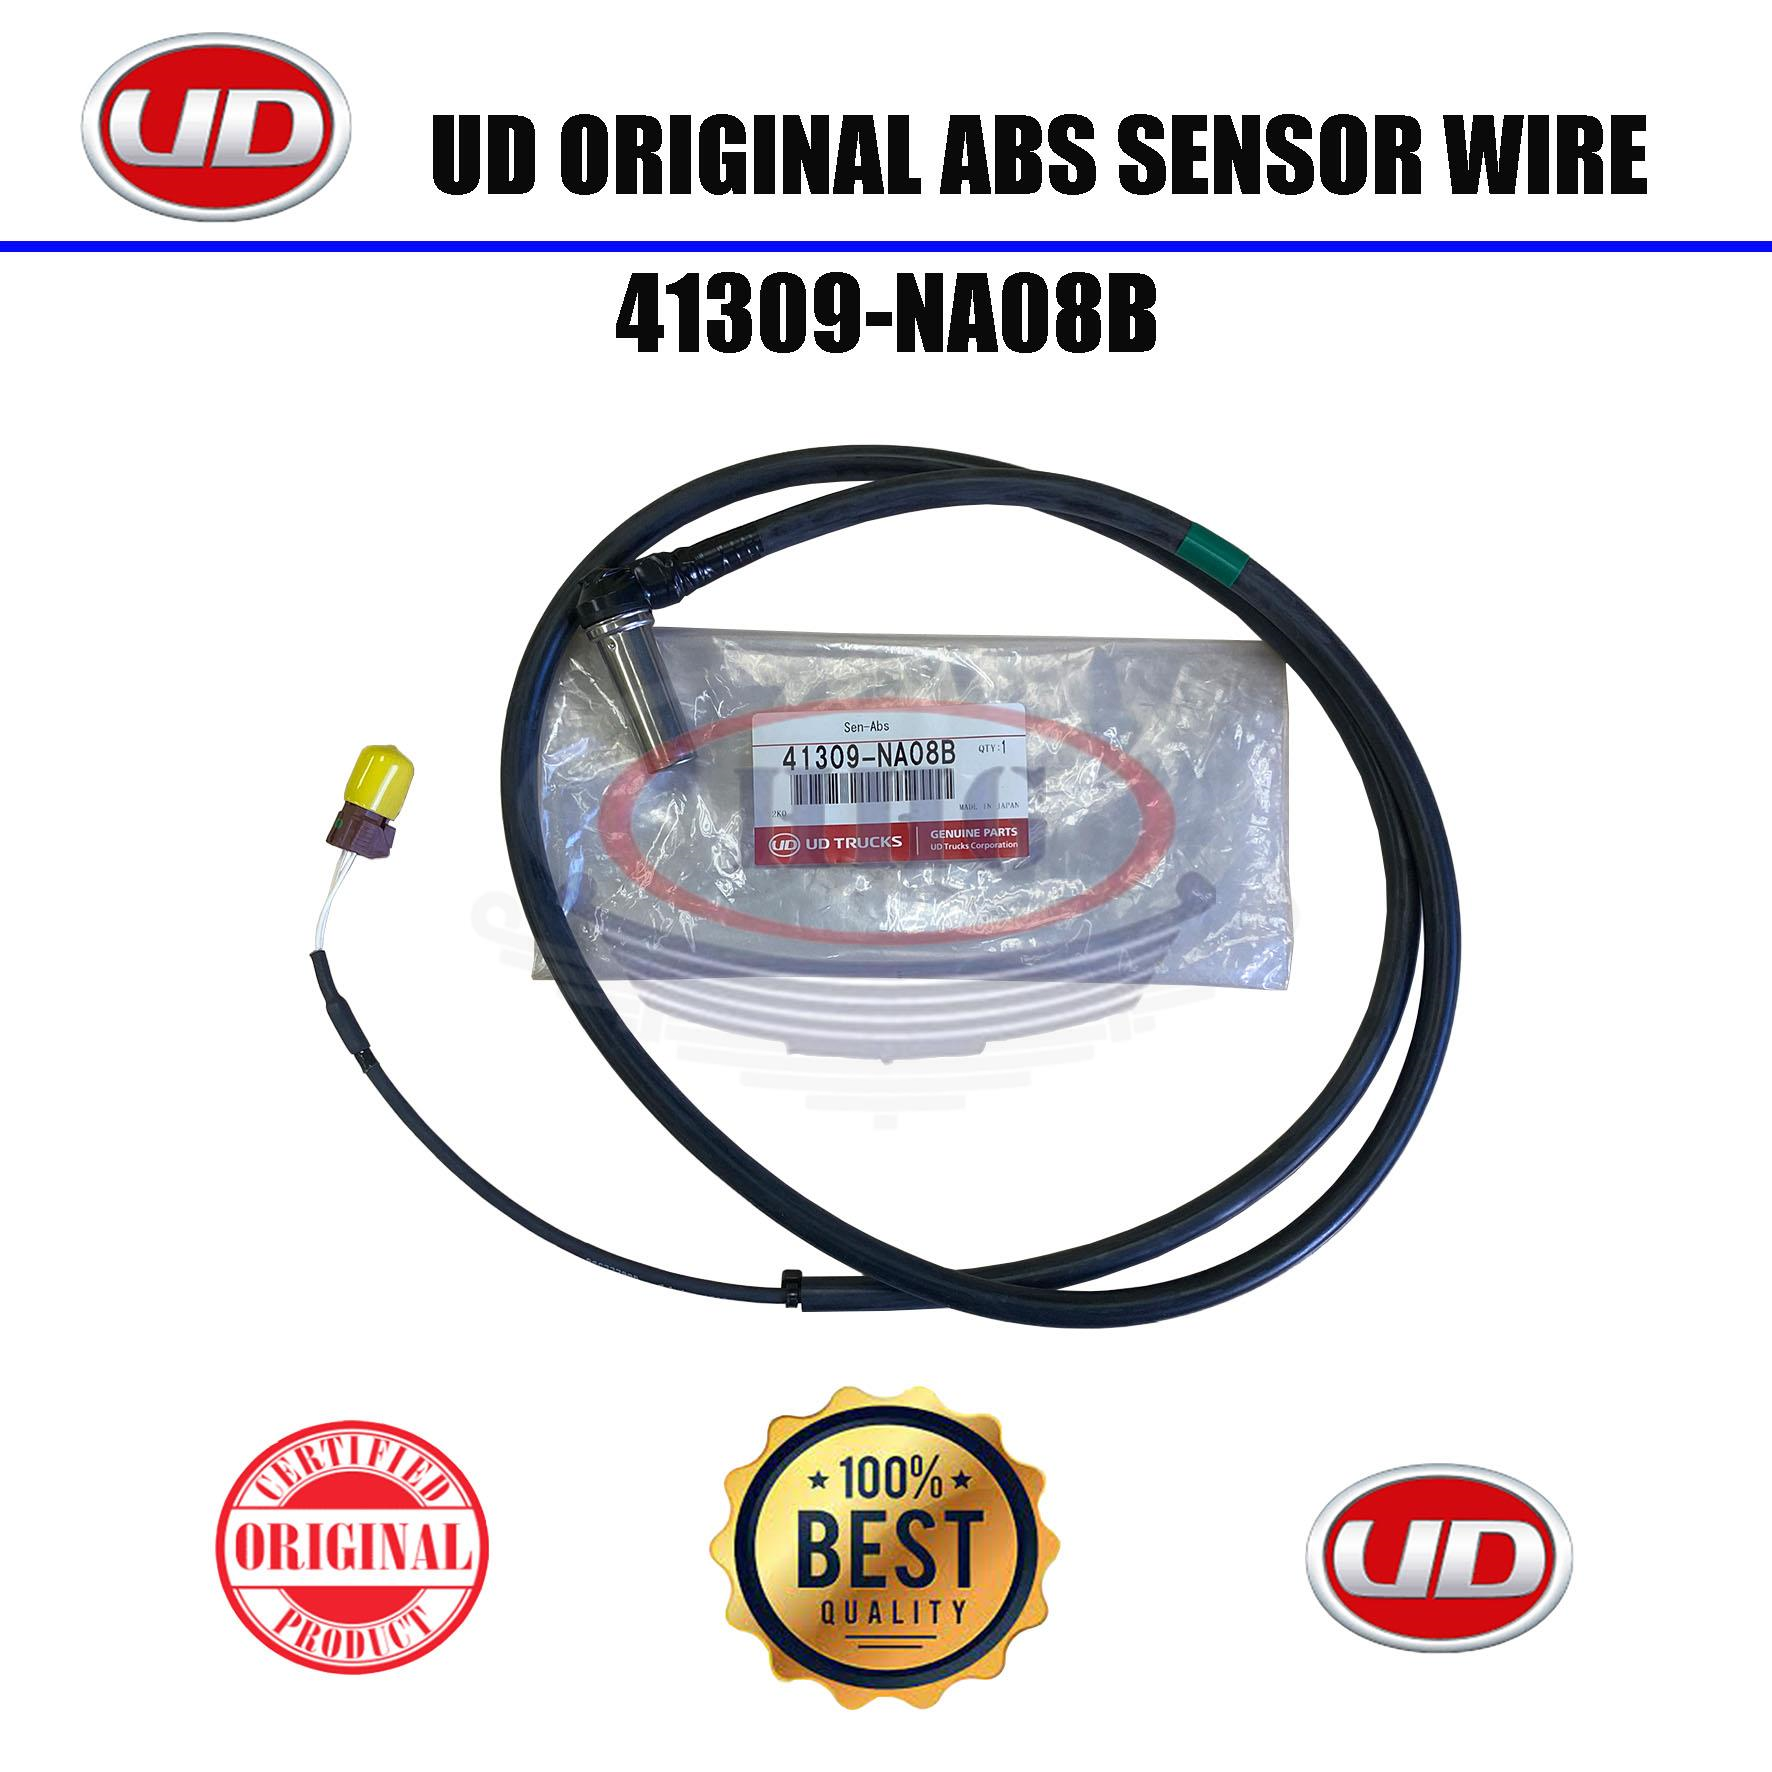 UD Original CD5 ABS Sensor Wire (41309-NA08B)